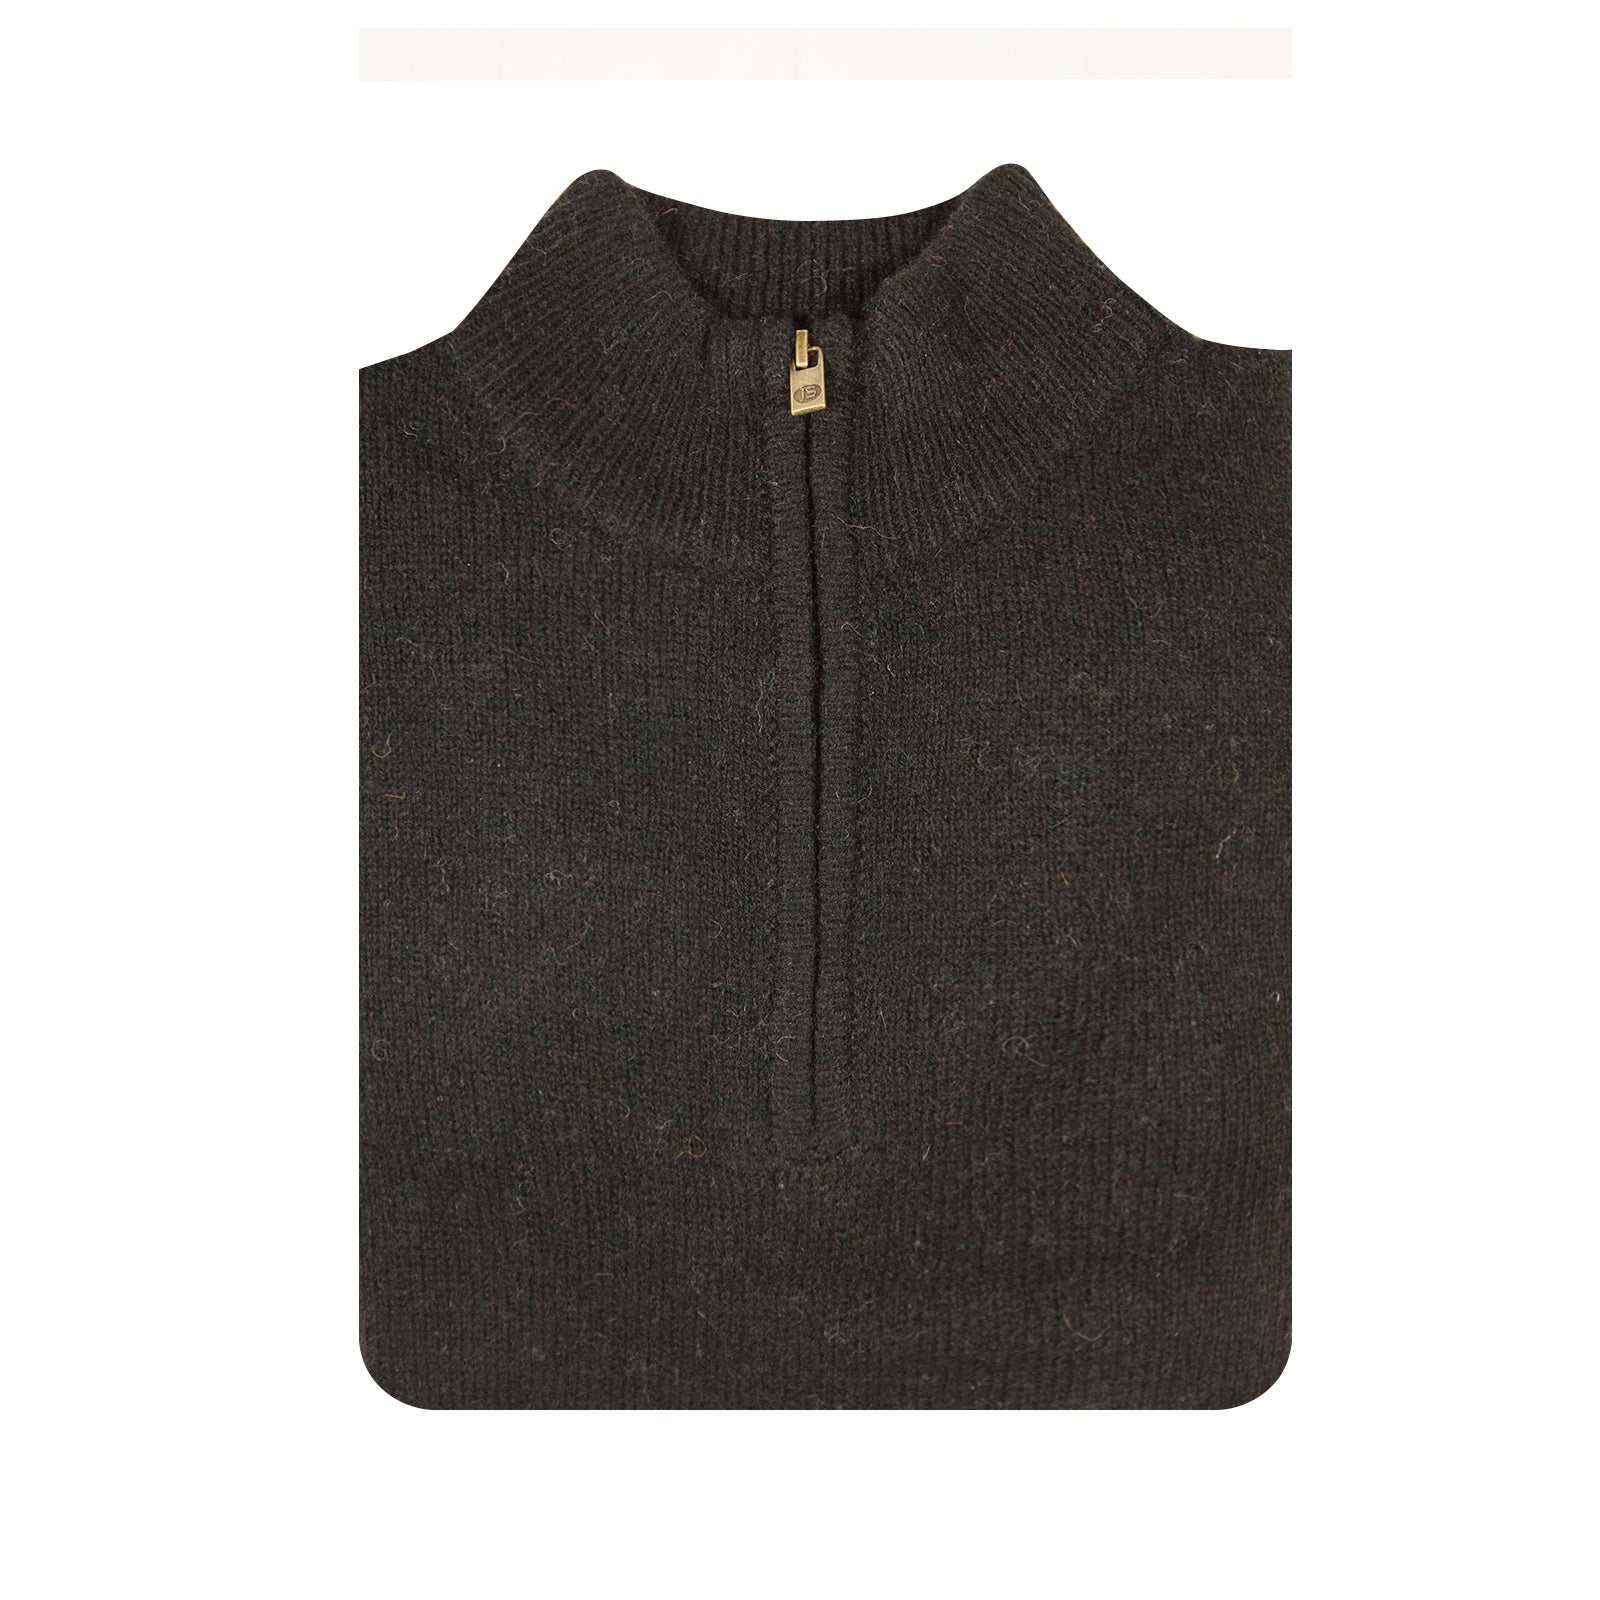 100% SHETLAND WOOL Half Zip Up Knit JUMPER Pullover Mens Sweater Knitted - Plain Black - XXL